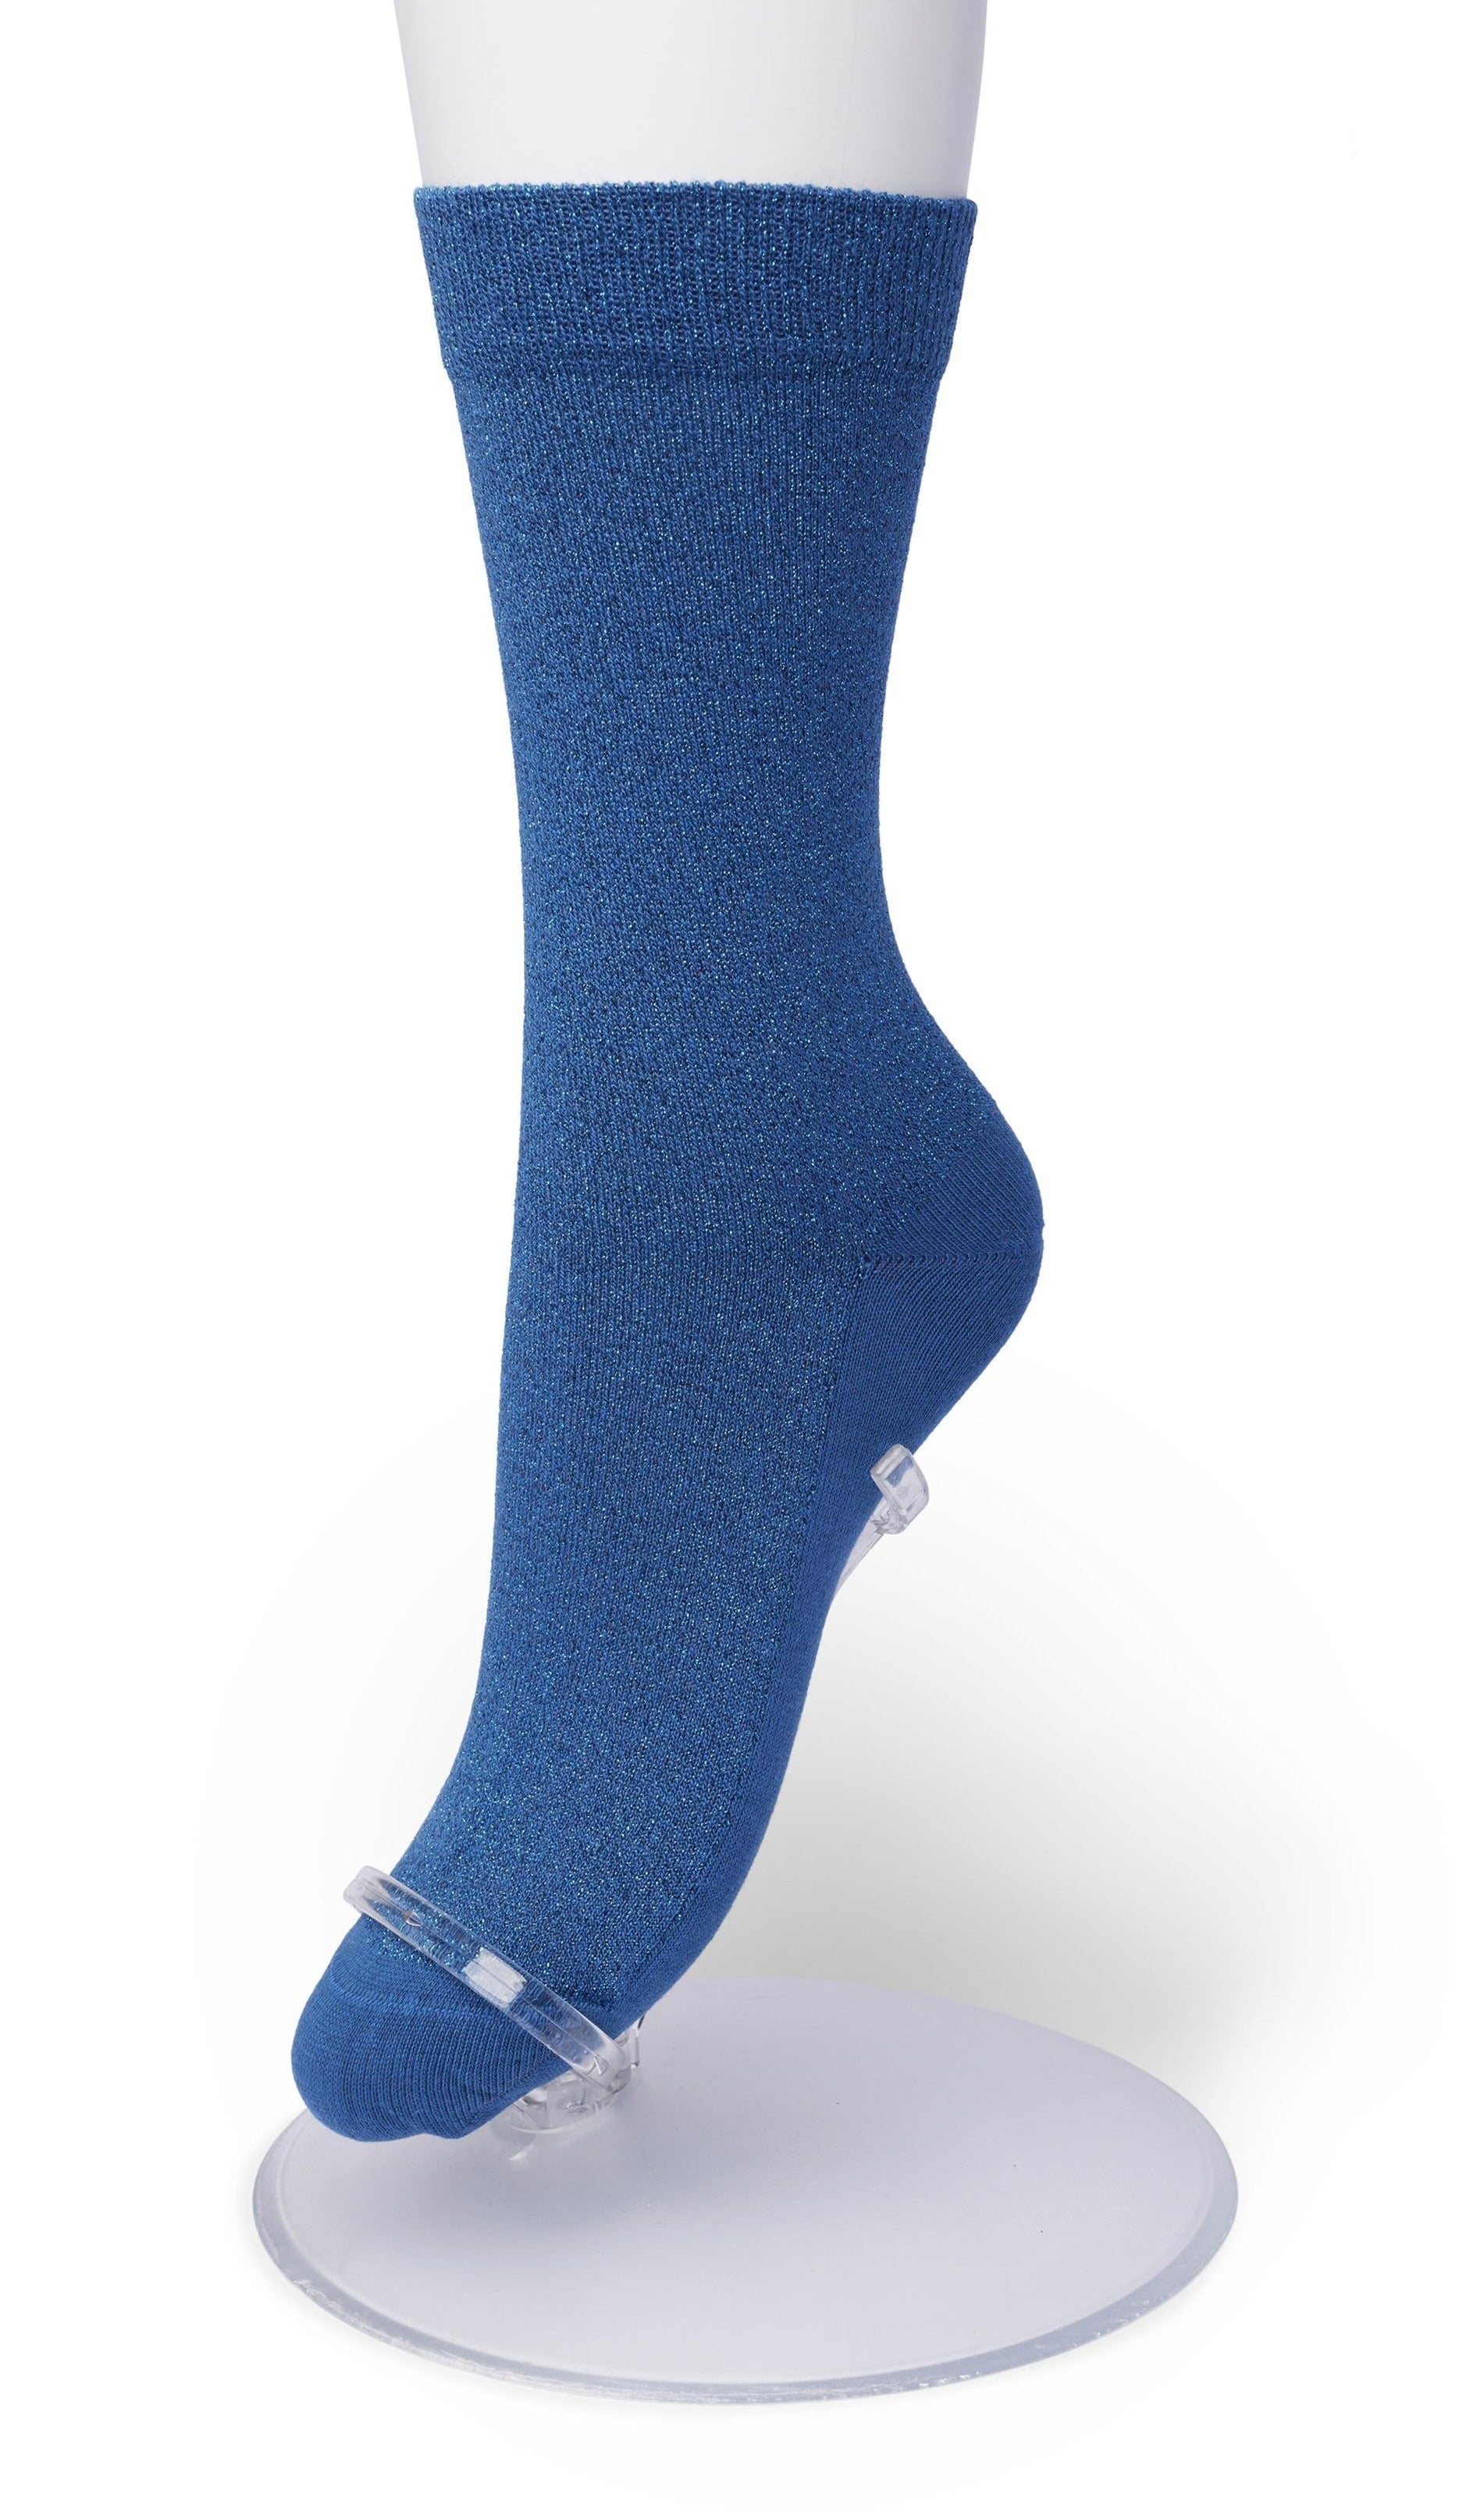 Bonnie Doon BP051138 Cotton Sparkle Socks - Blue (Ashes) socks with sparkly glitter lam̩ lurex